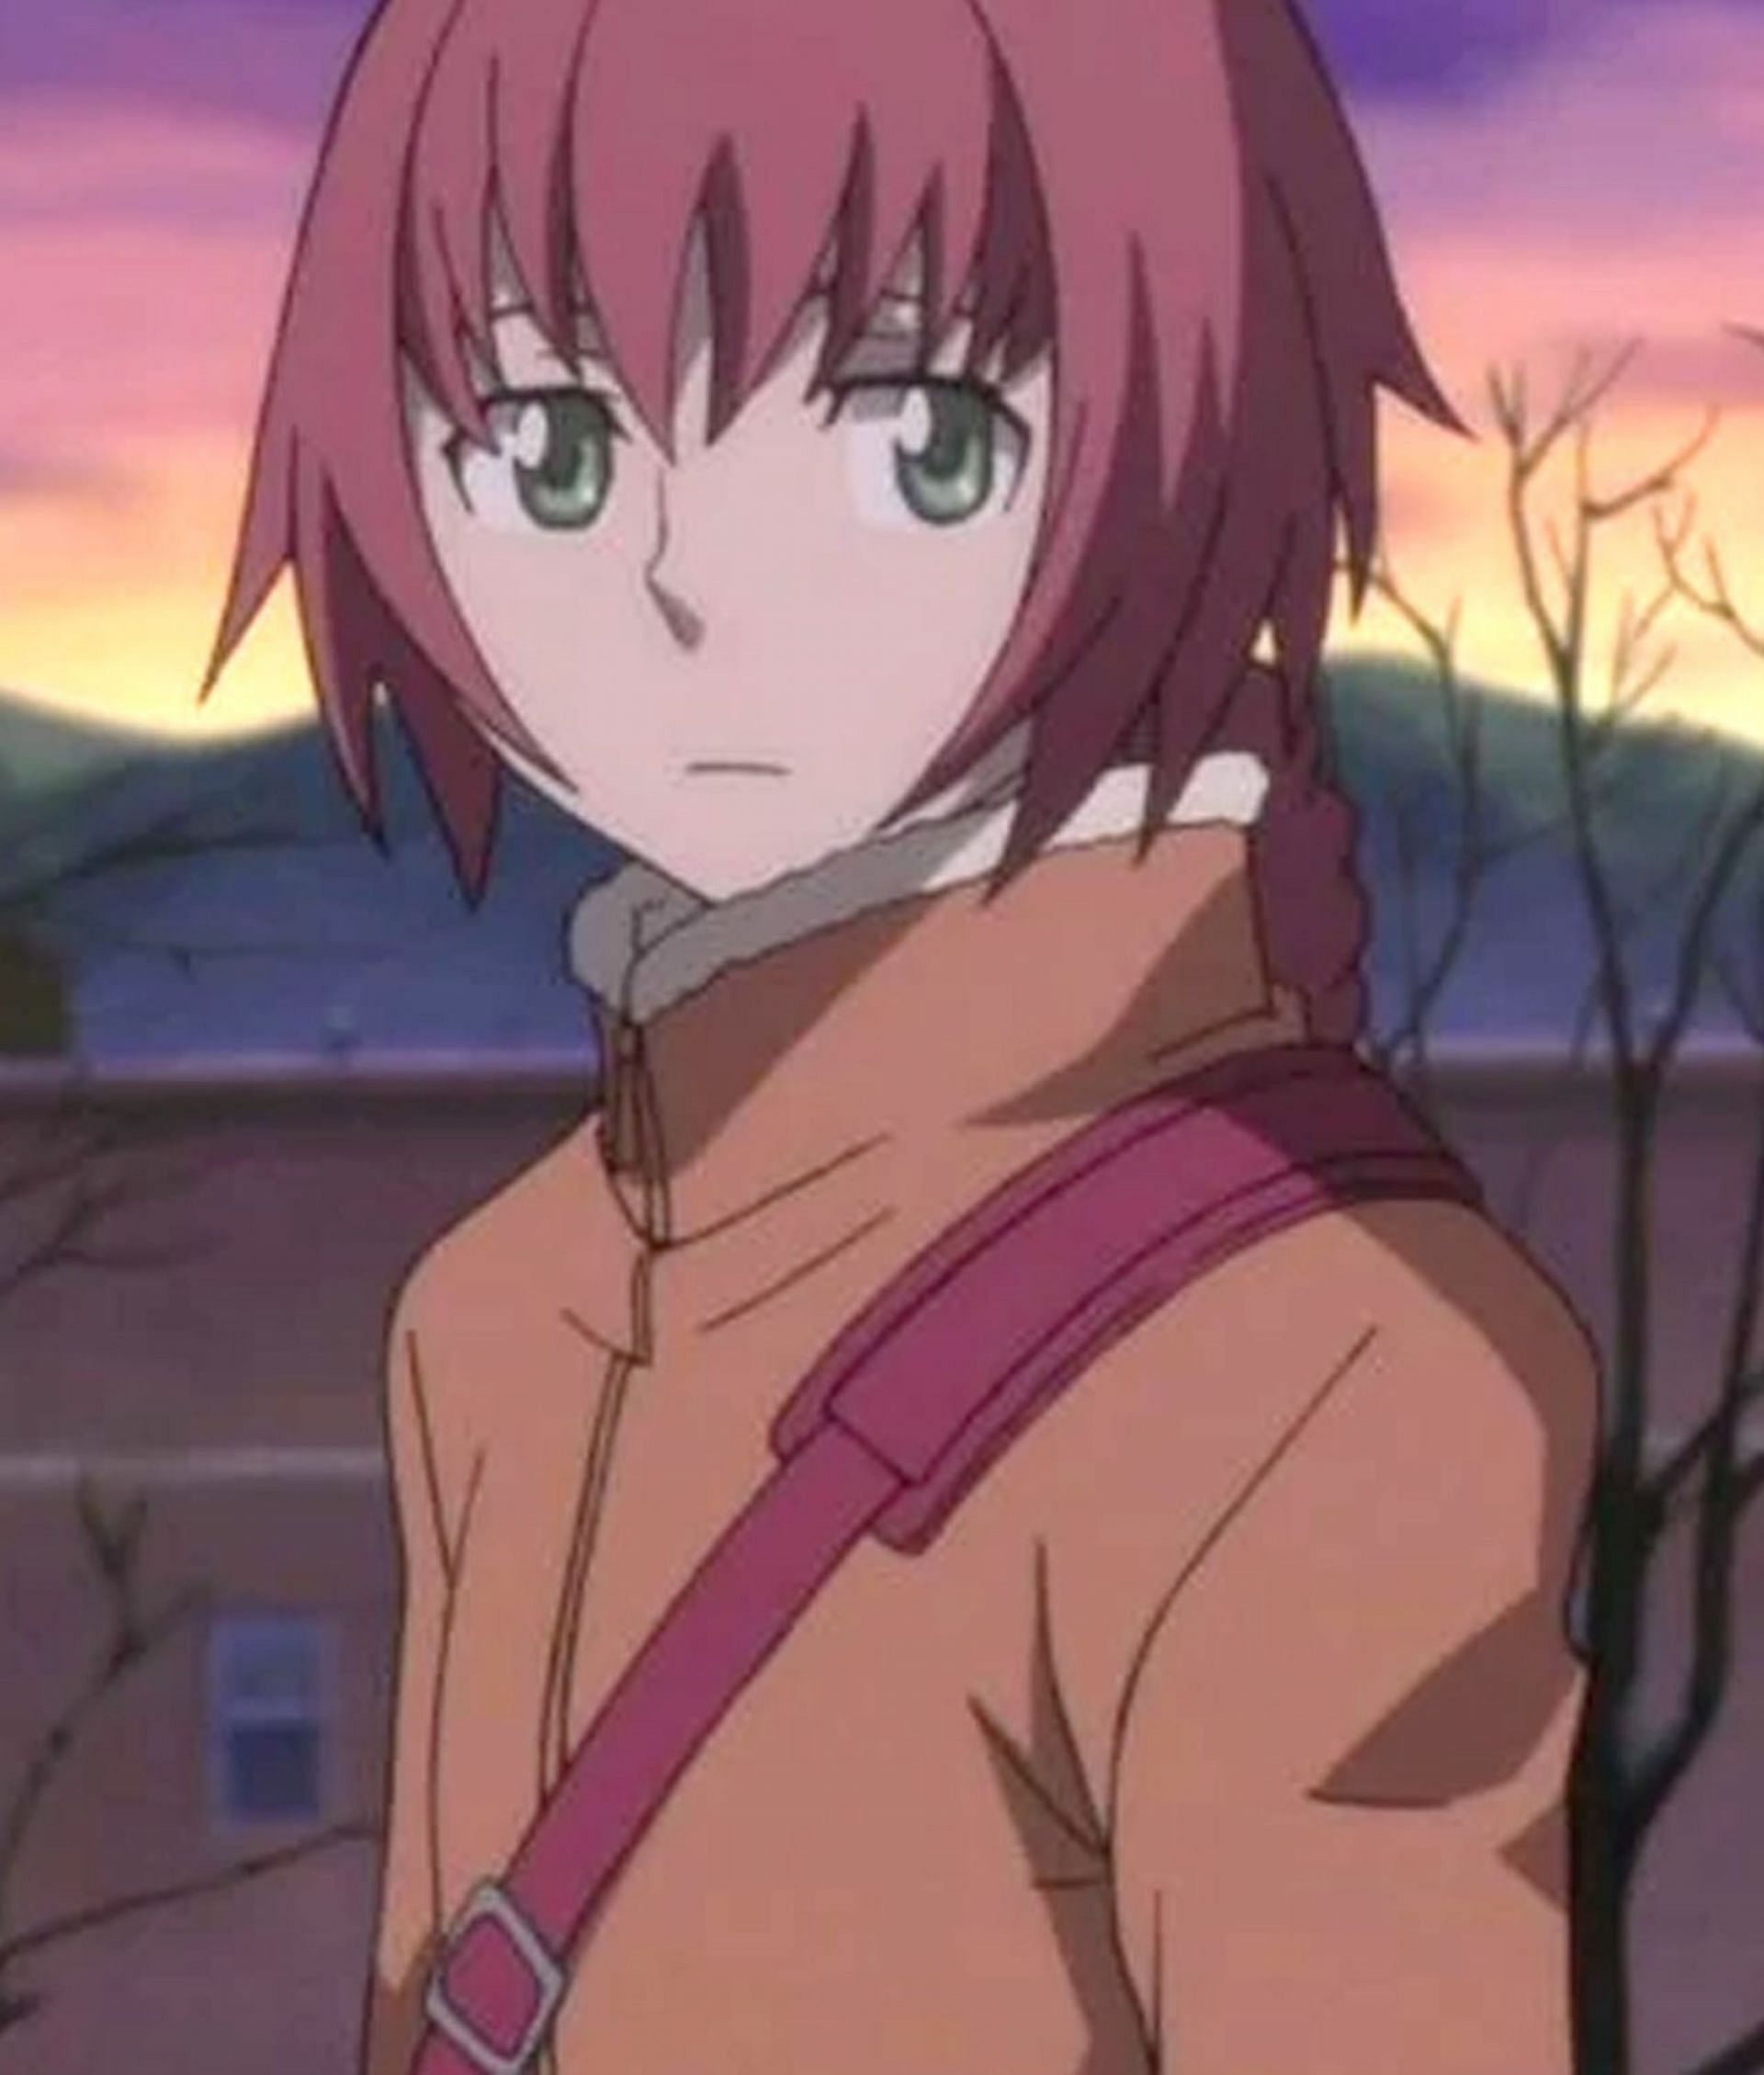 Suou Pavlichenko in the anime (Image via Studio Bones)